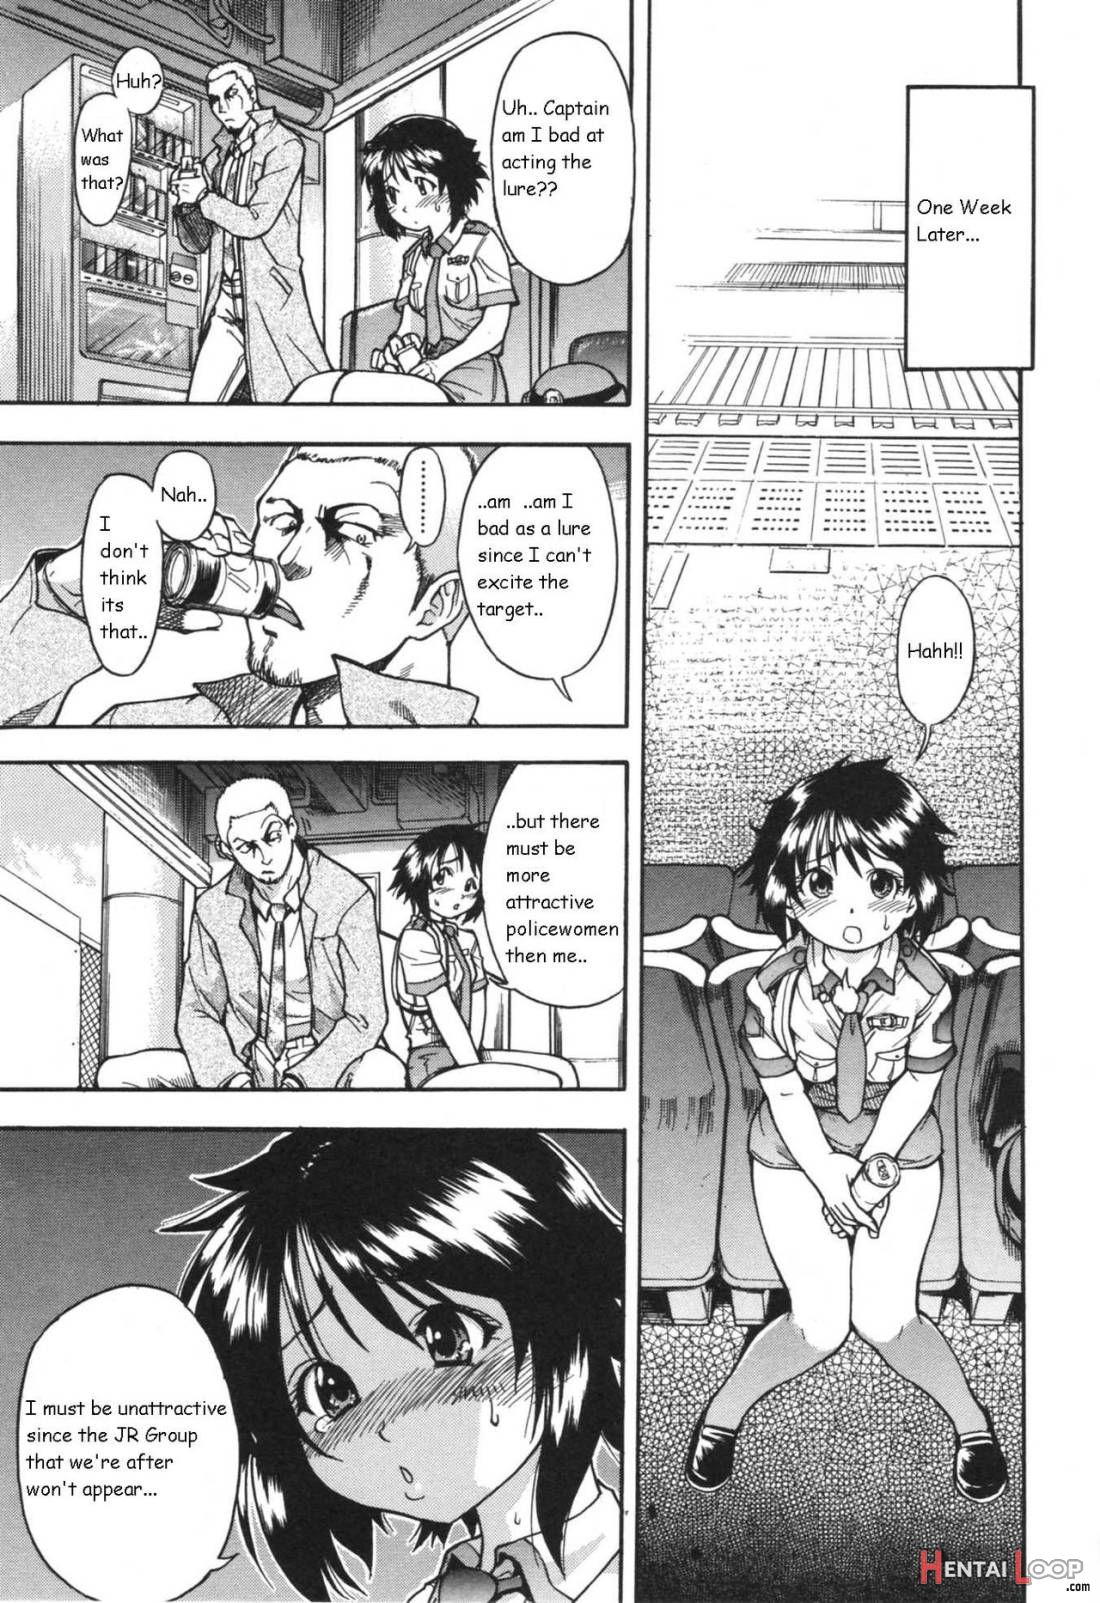 Sousa E-gakari Ishihara Mina!! page 7